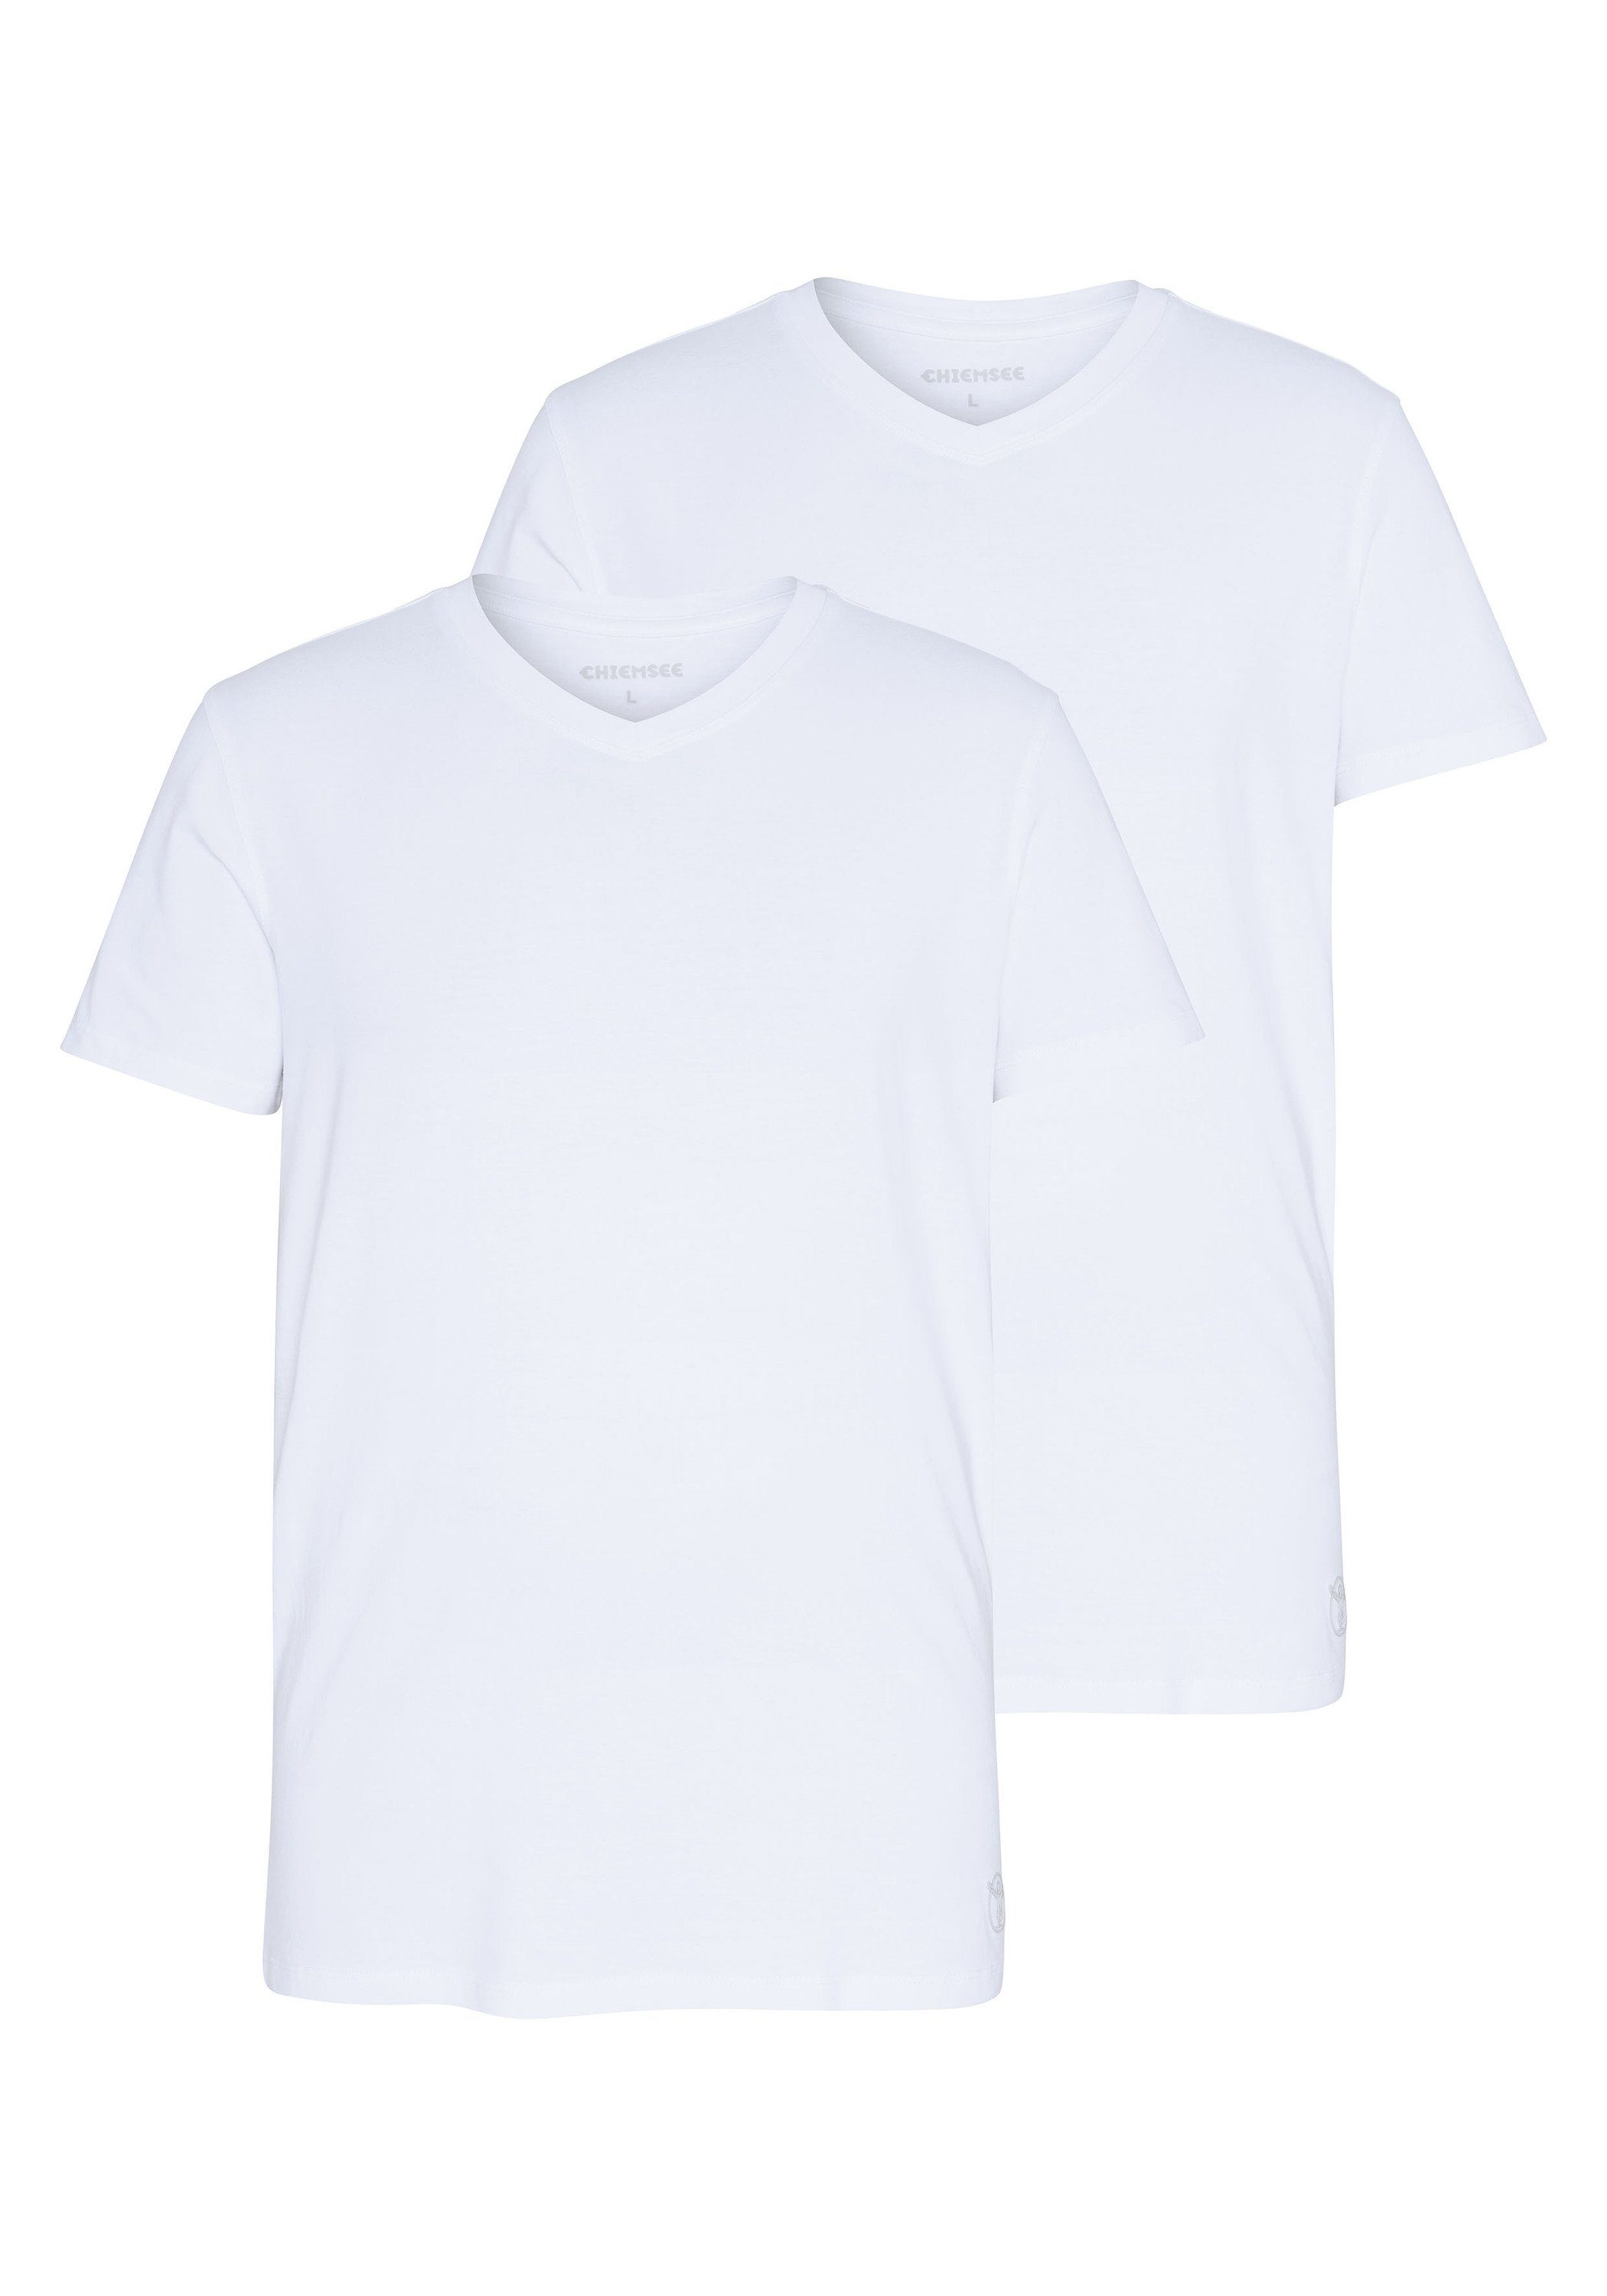 11-0601 Chiemsee 1 T-Shirt White T-Shirt Doppelpack im V-Neck mit Bright